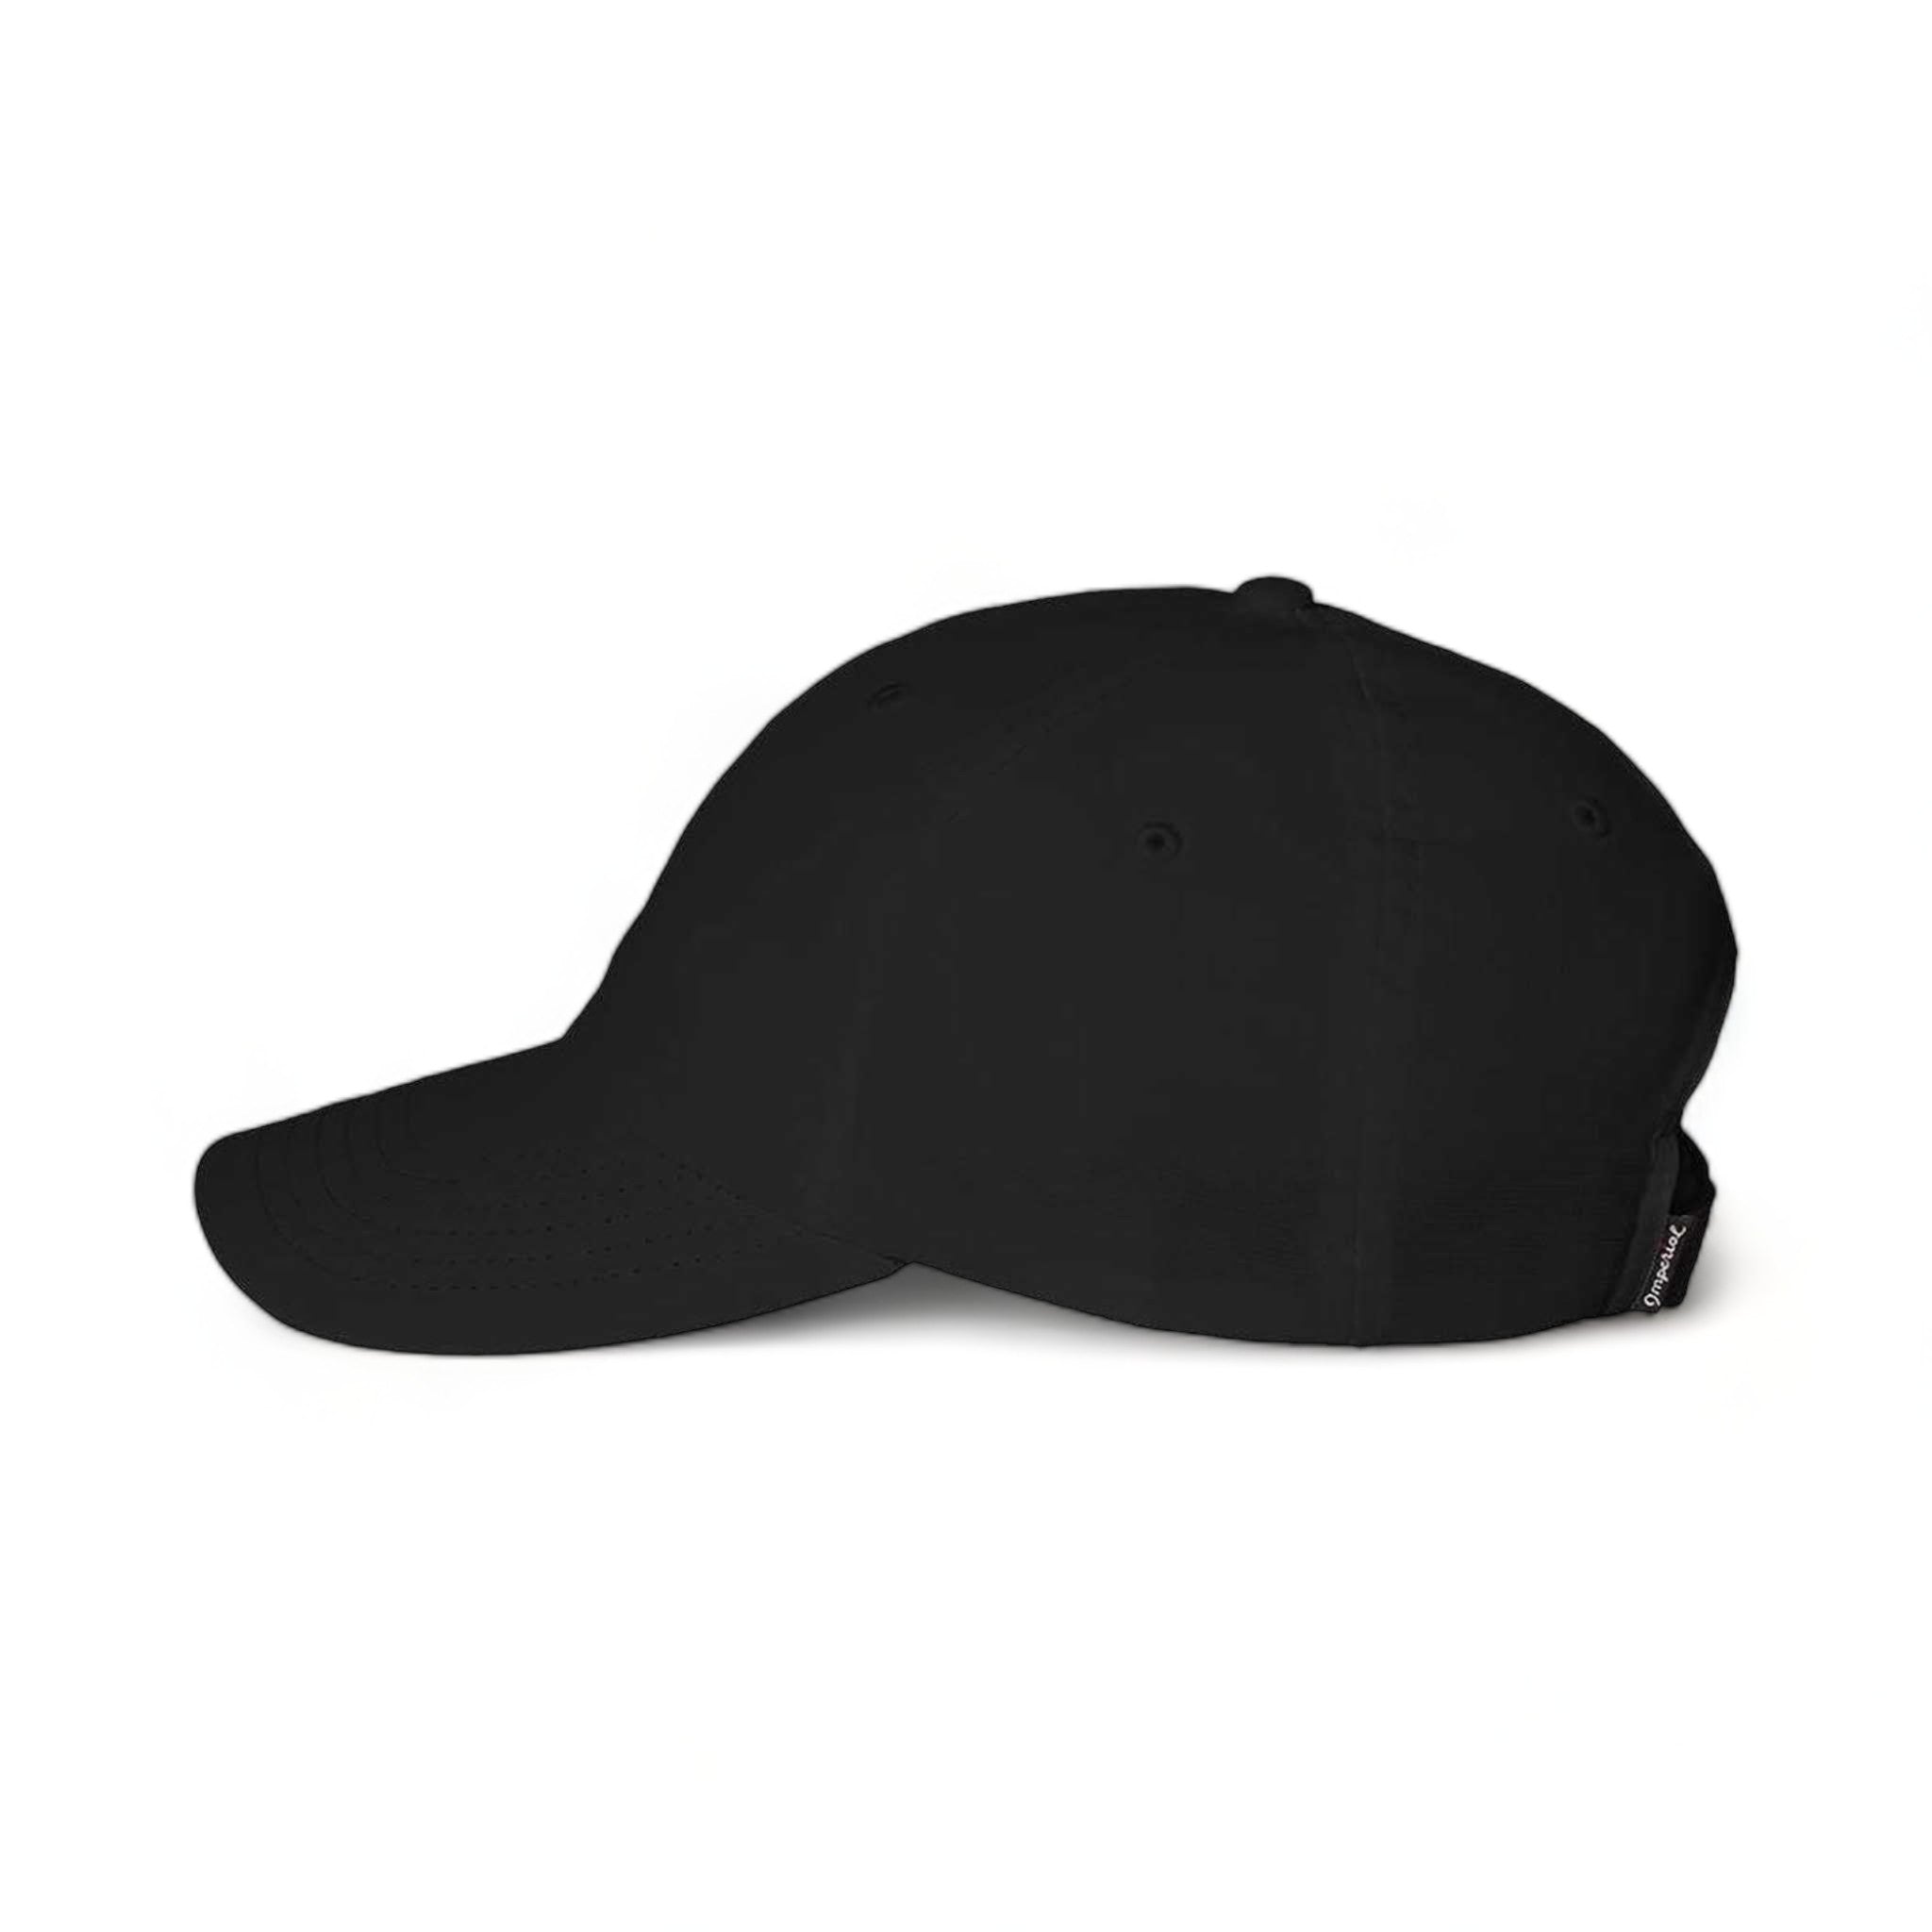 Side view of Imperial X210P custom hat in black